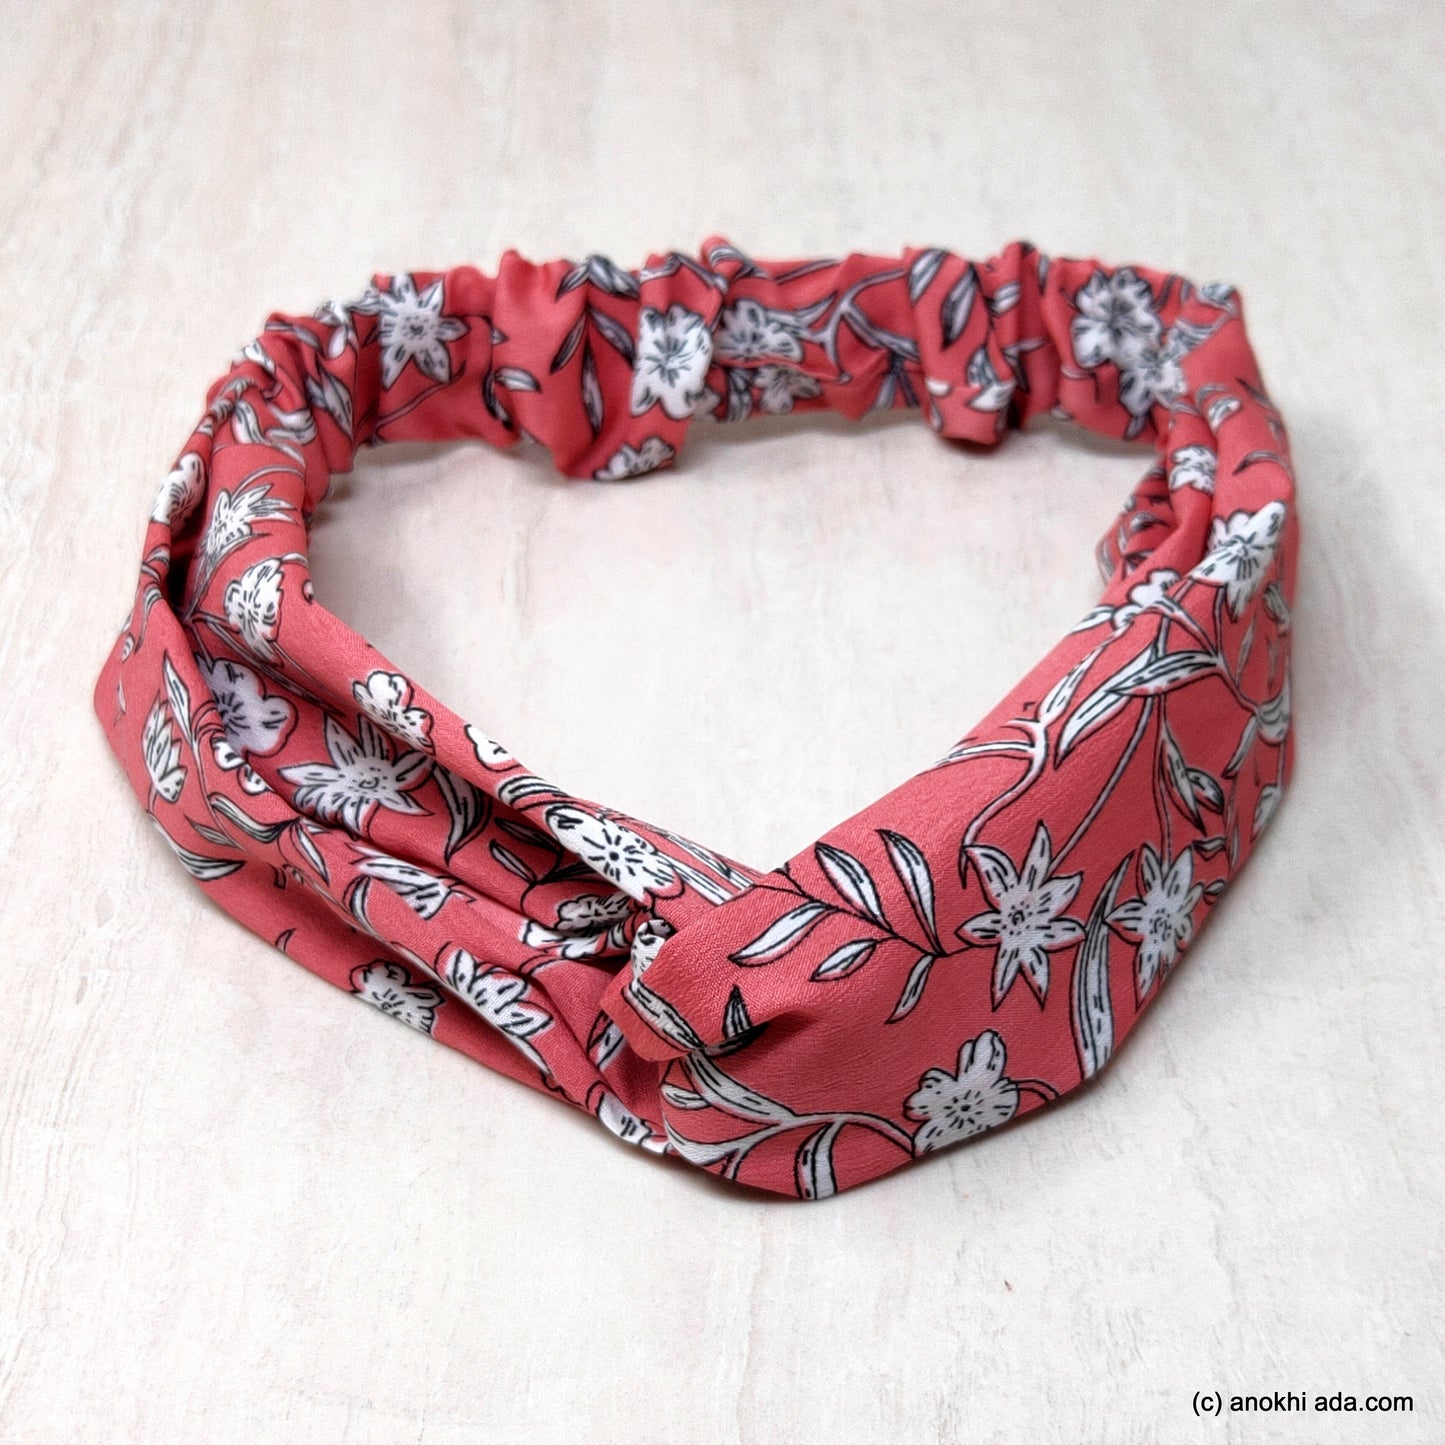 Anokhi Ada Multi-Colour Printed Fabric Headband for Girls and Women (ZK-26)